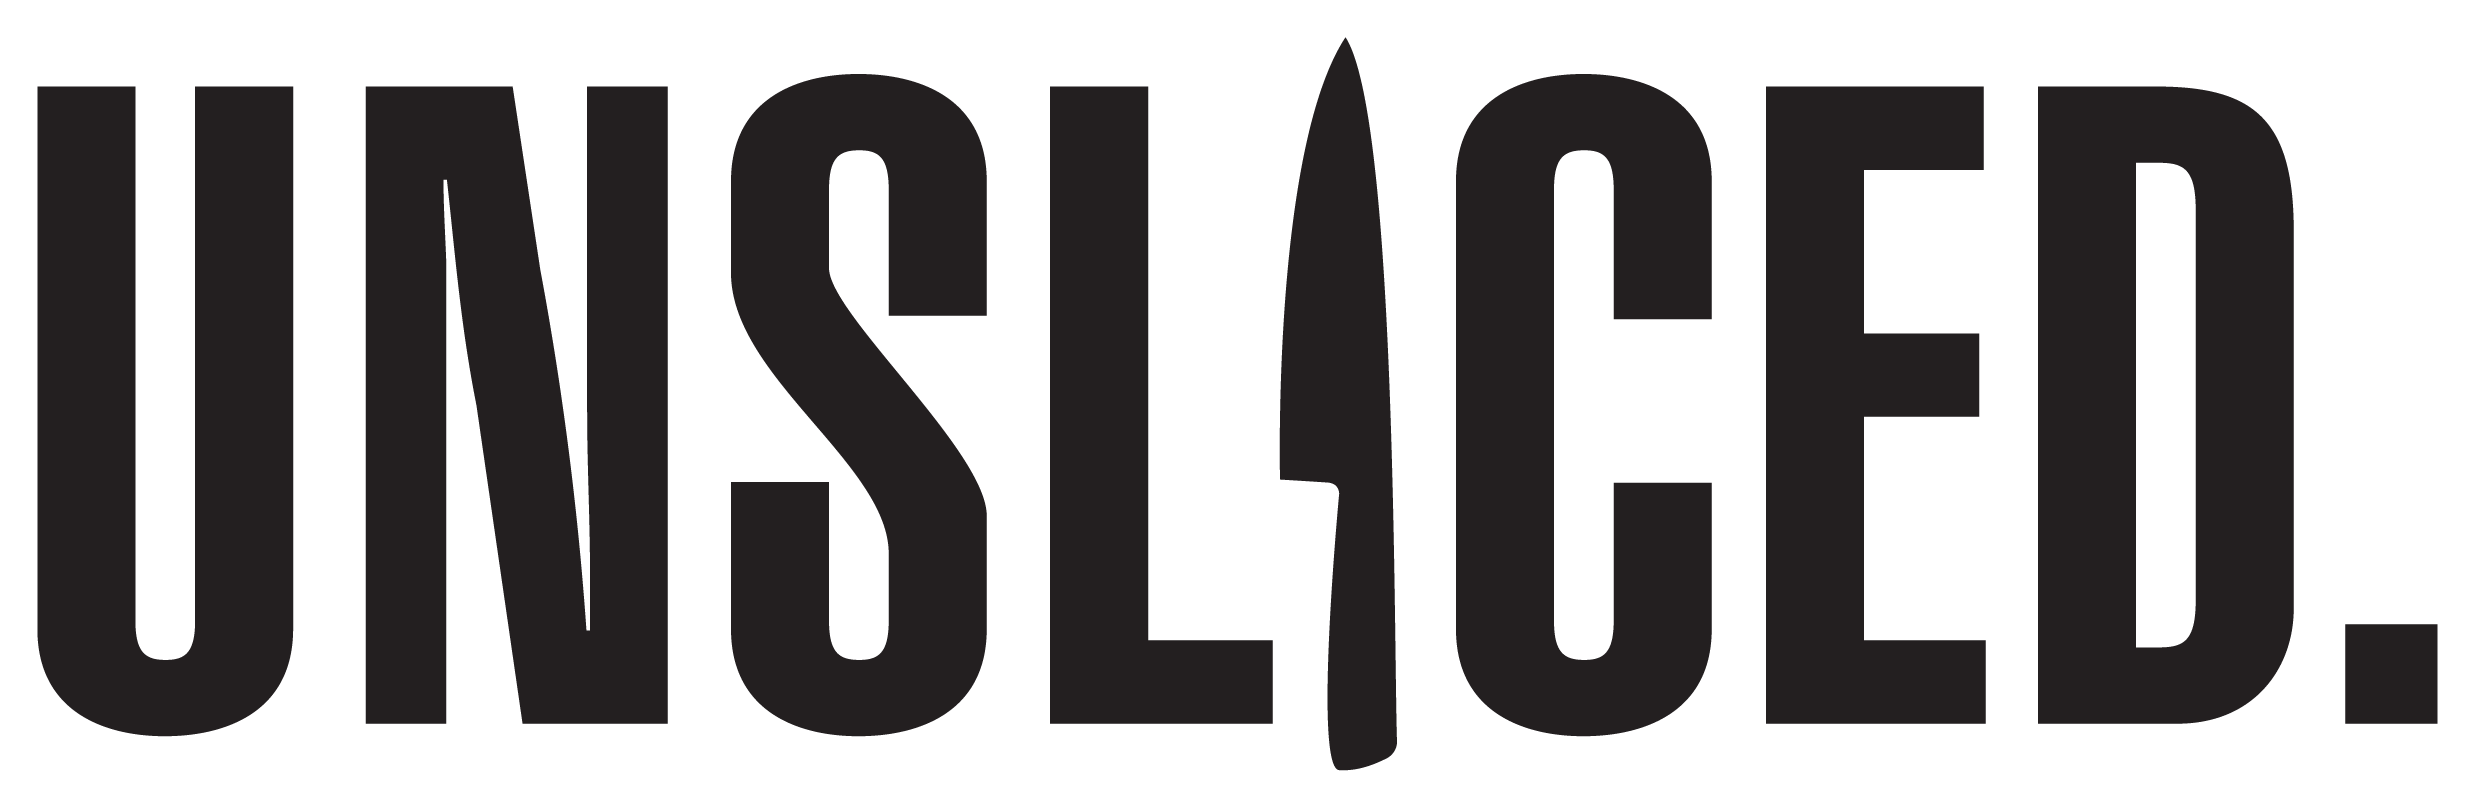 Unsliced Logo